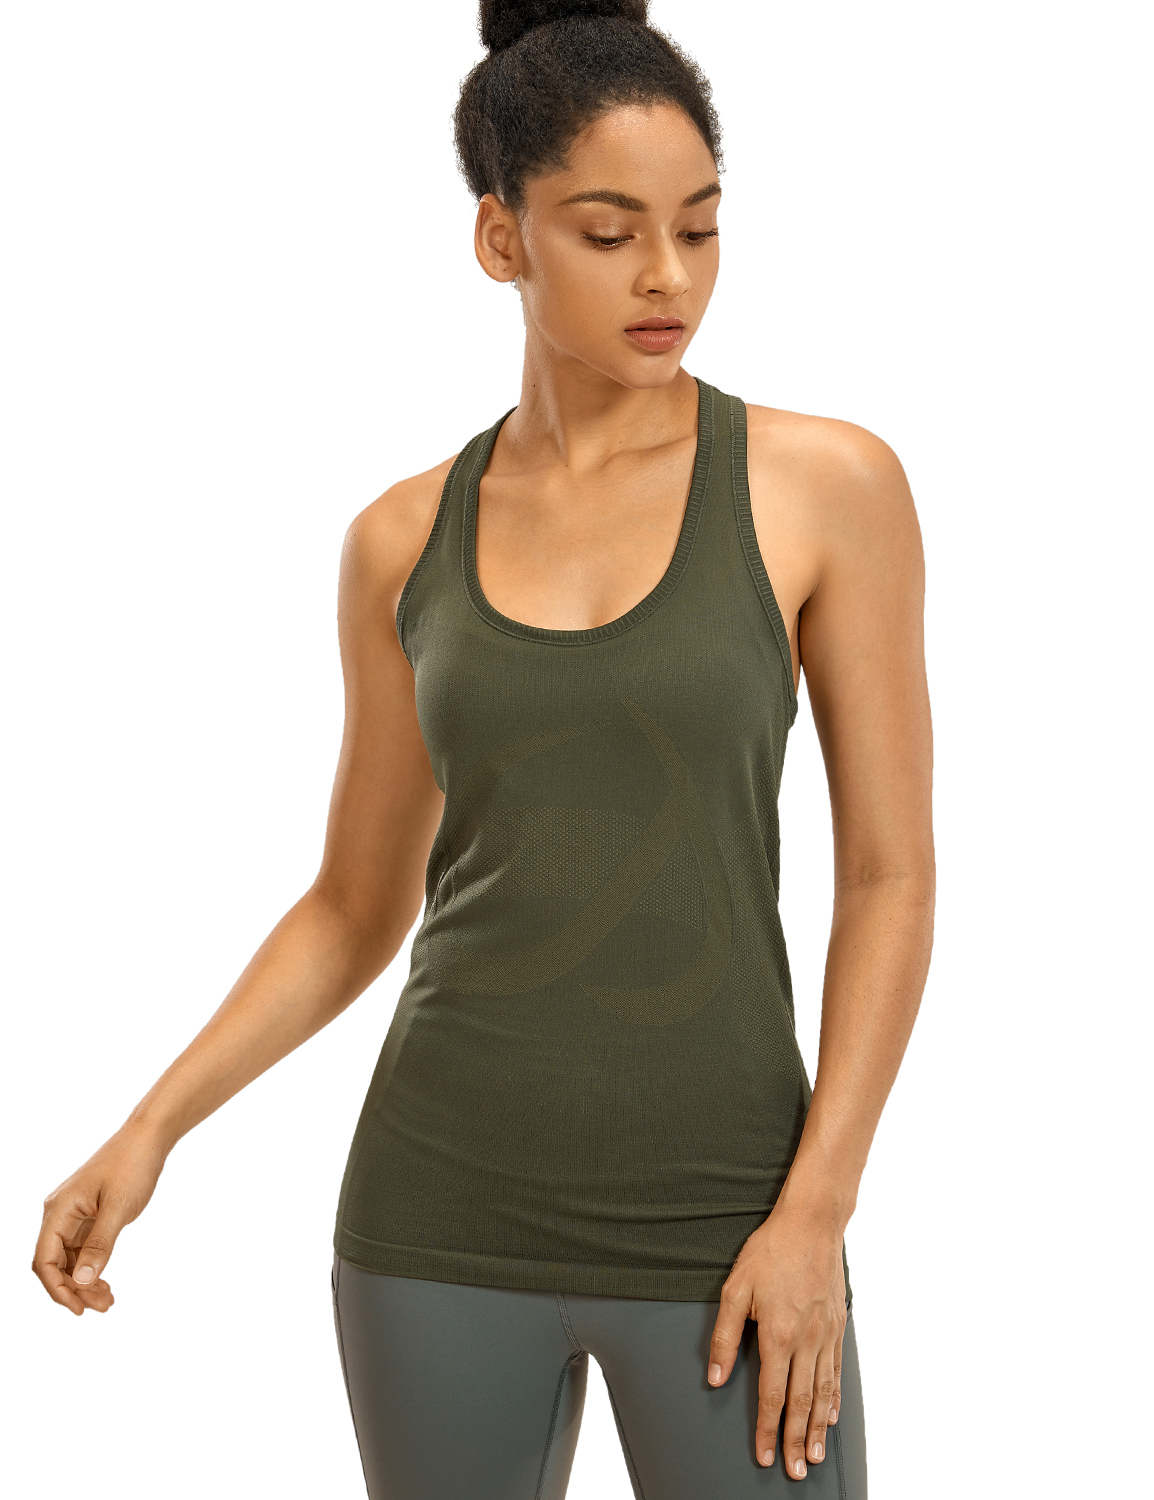 prAna Prana Women's Green Tank Top Stretch Running Workout Yoga Shirt Size 11 